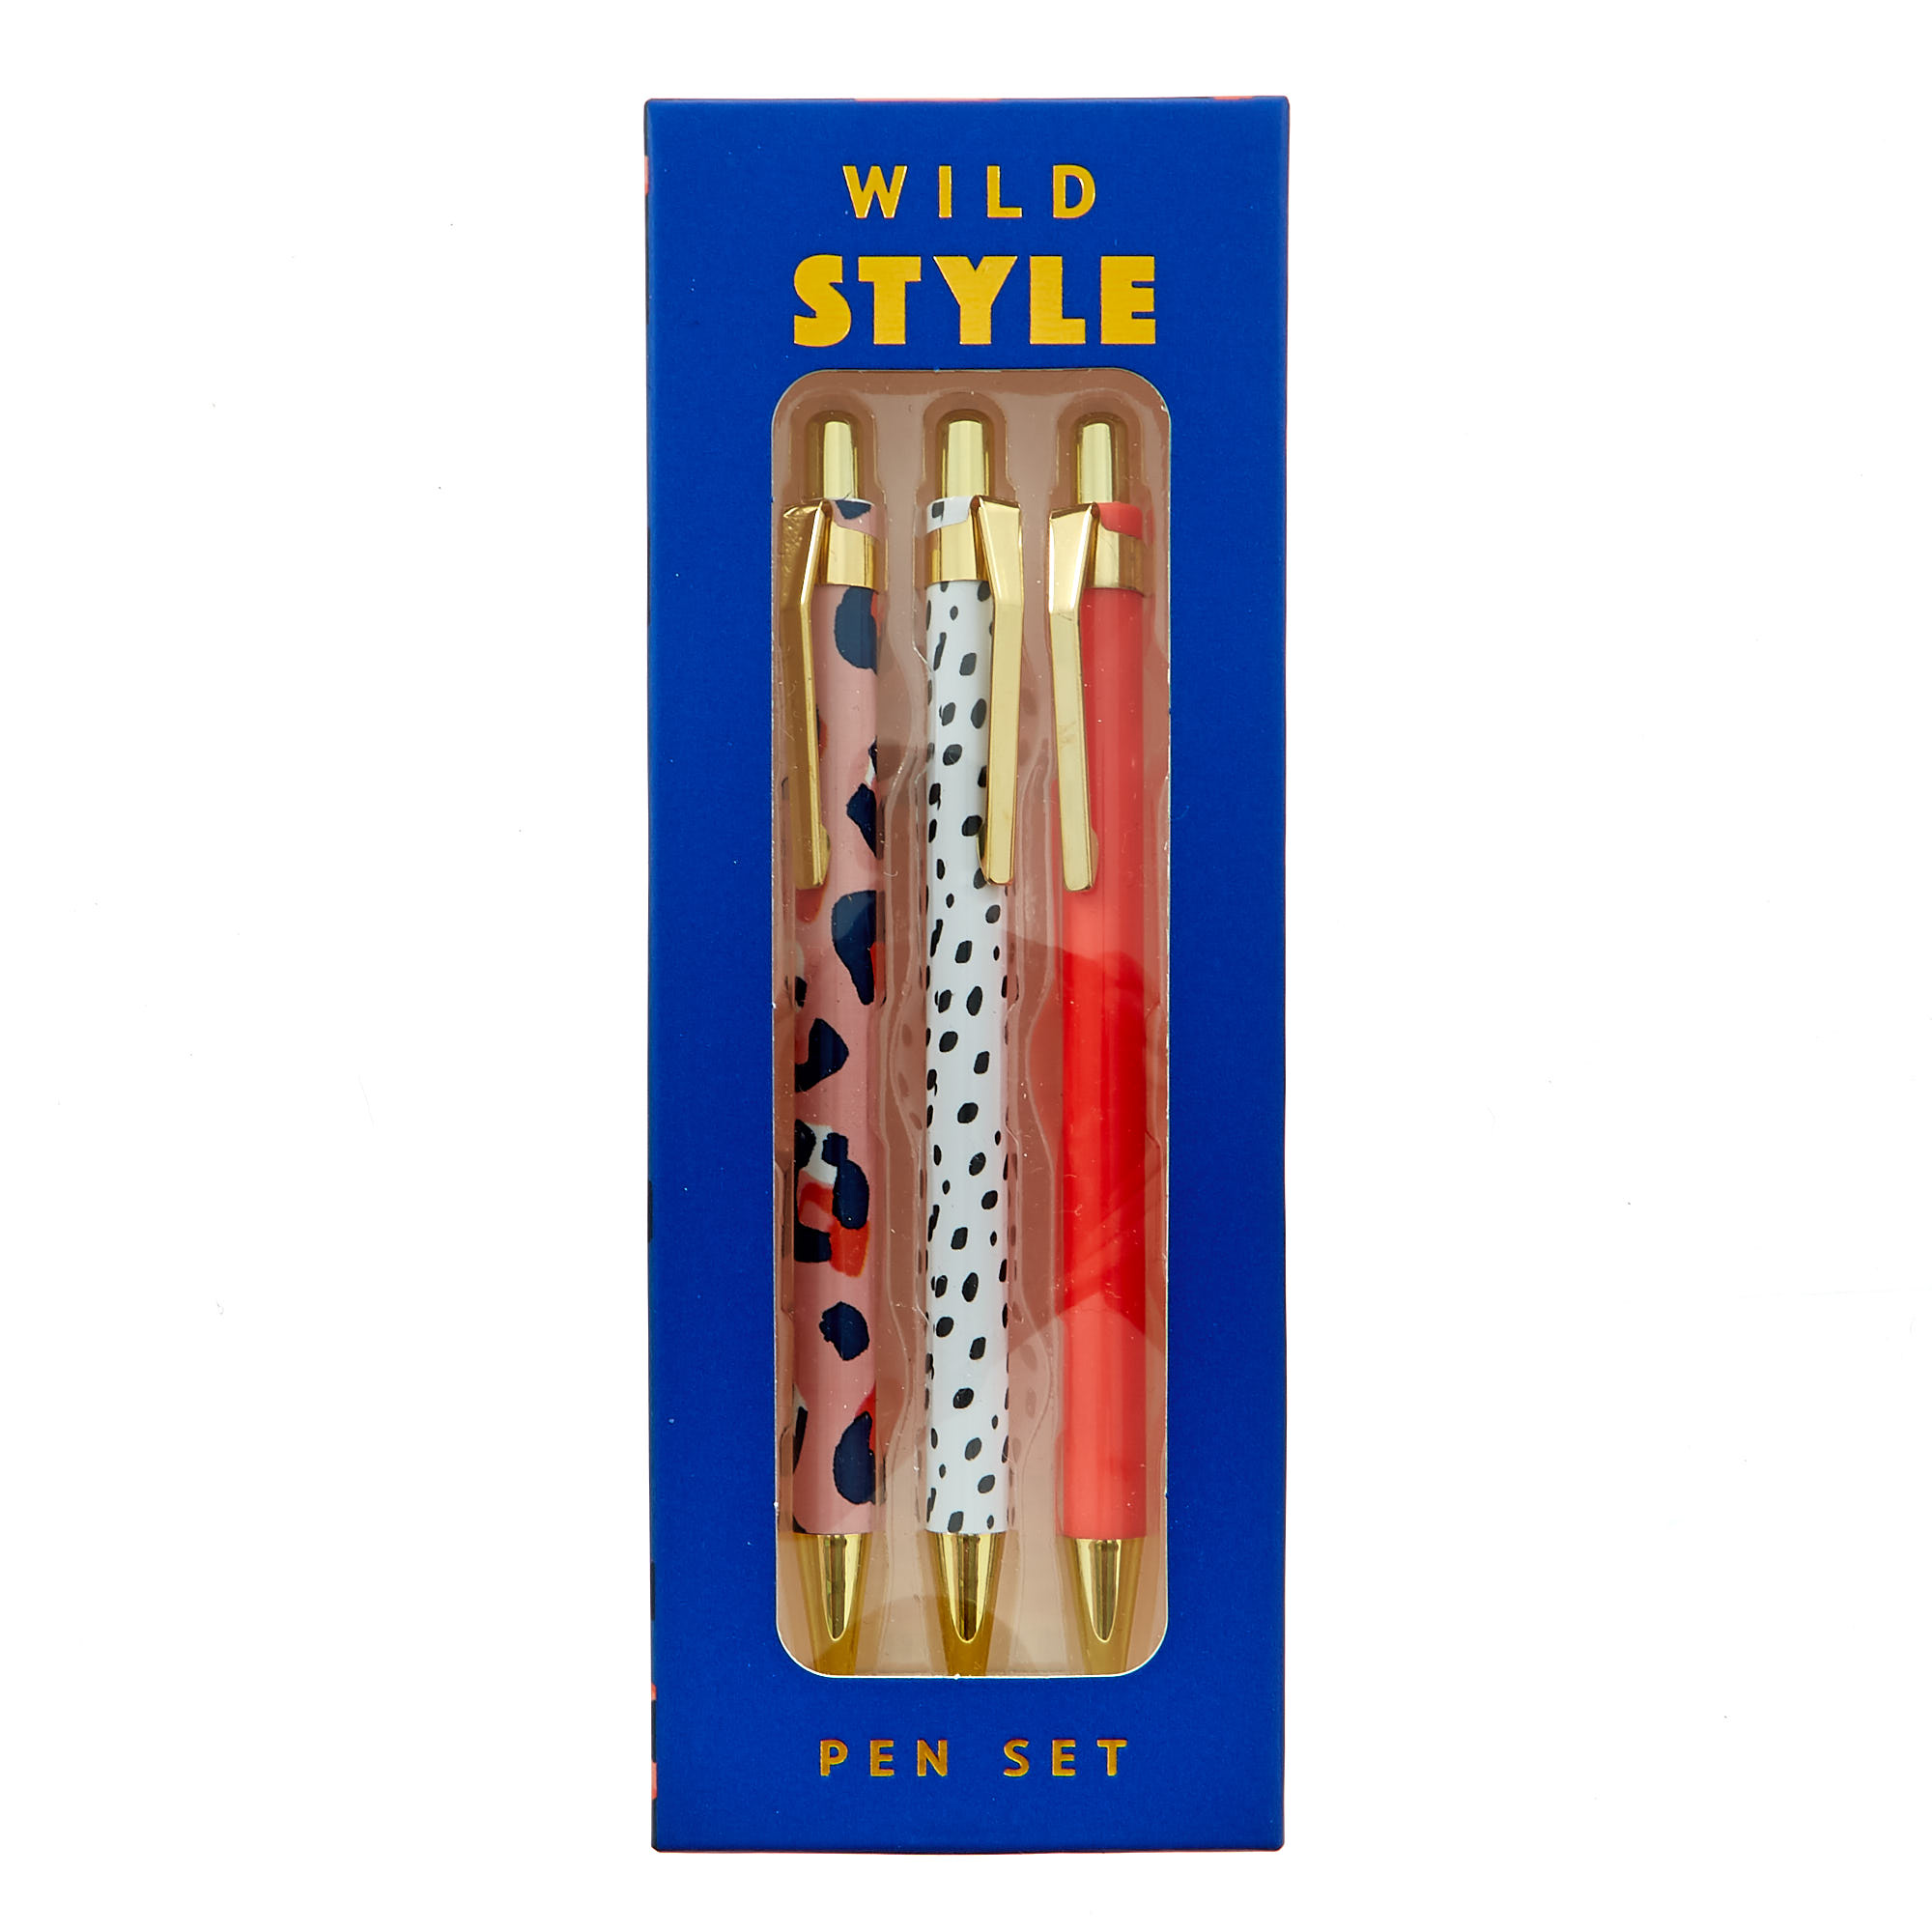 Wild Style Pens - Set of 3